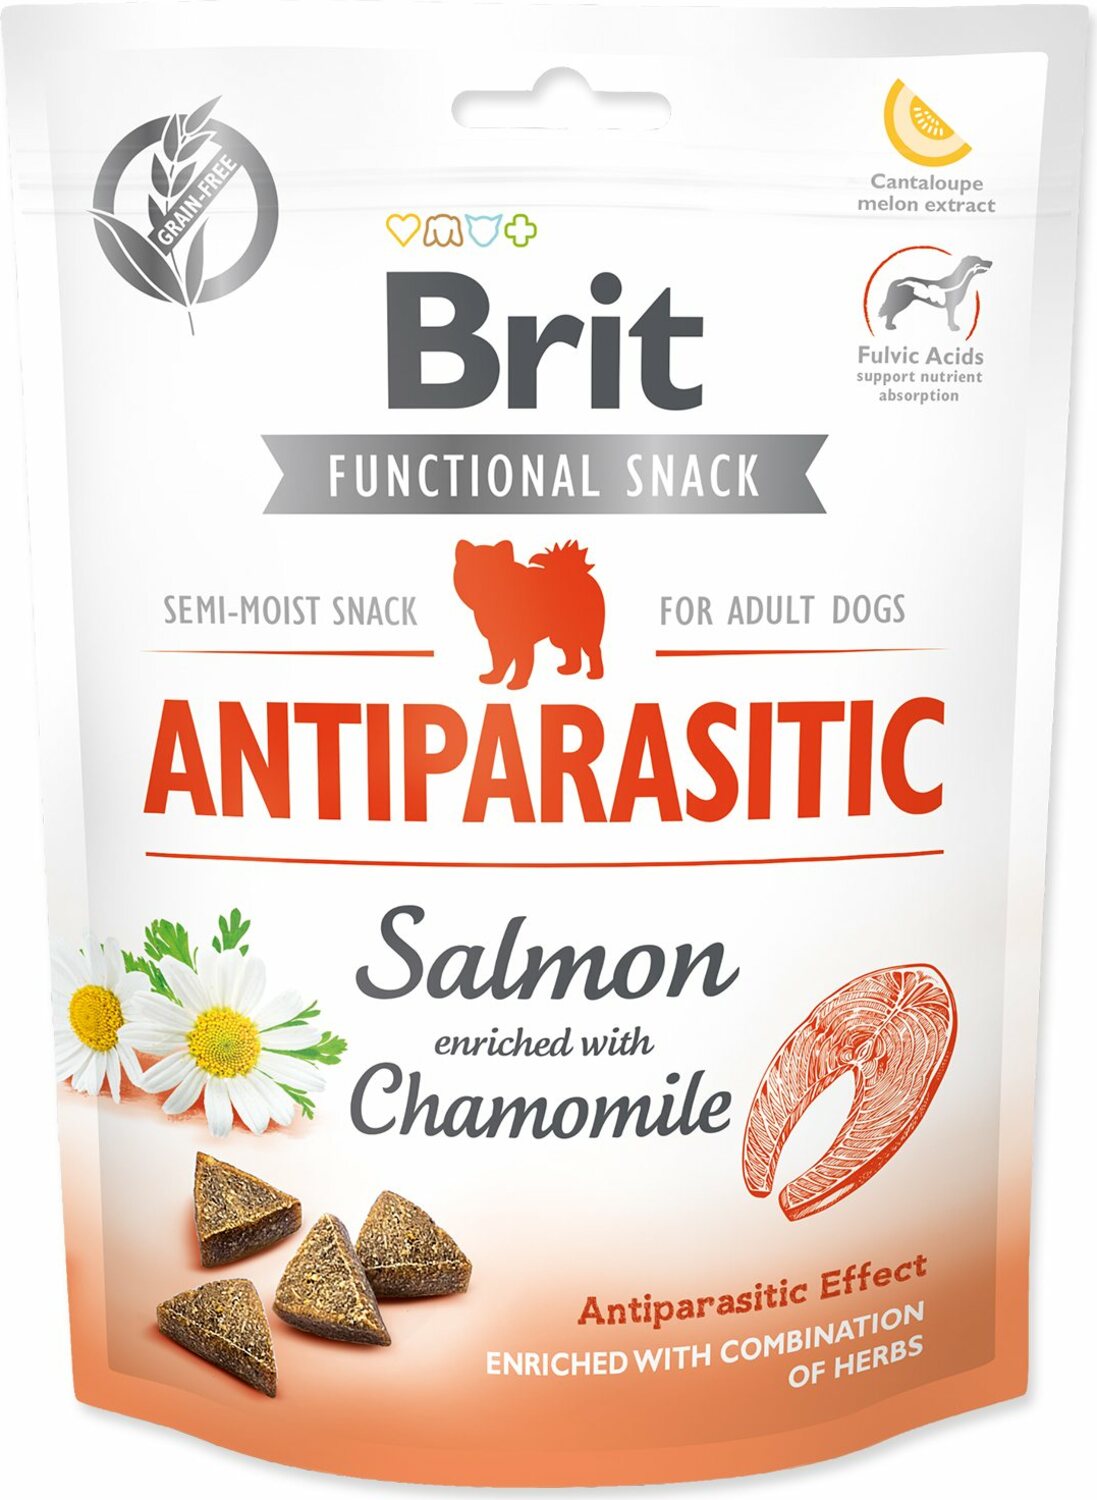 Pochoutka Brit Care Dog Functional Snack Antiparasitic losos 150g